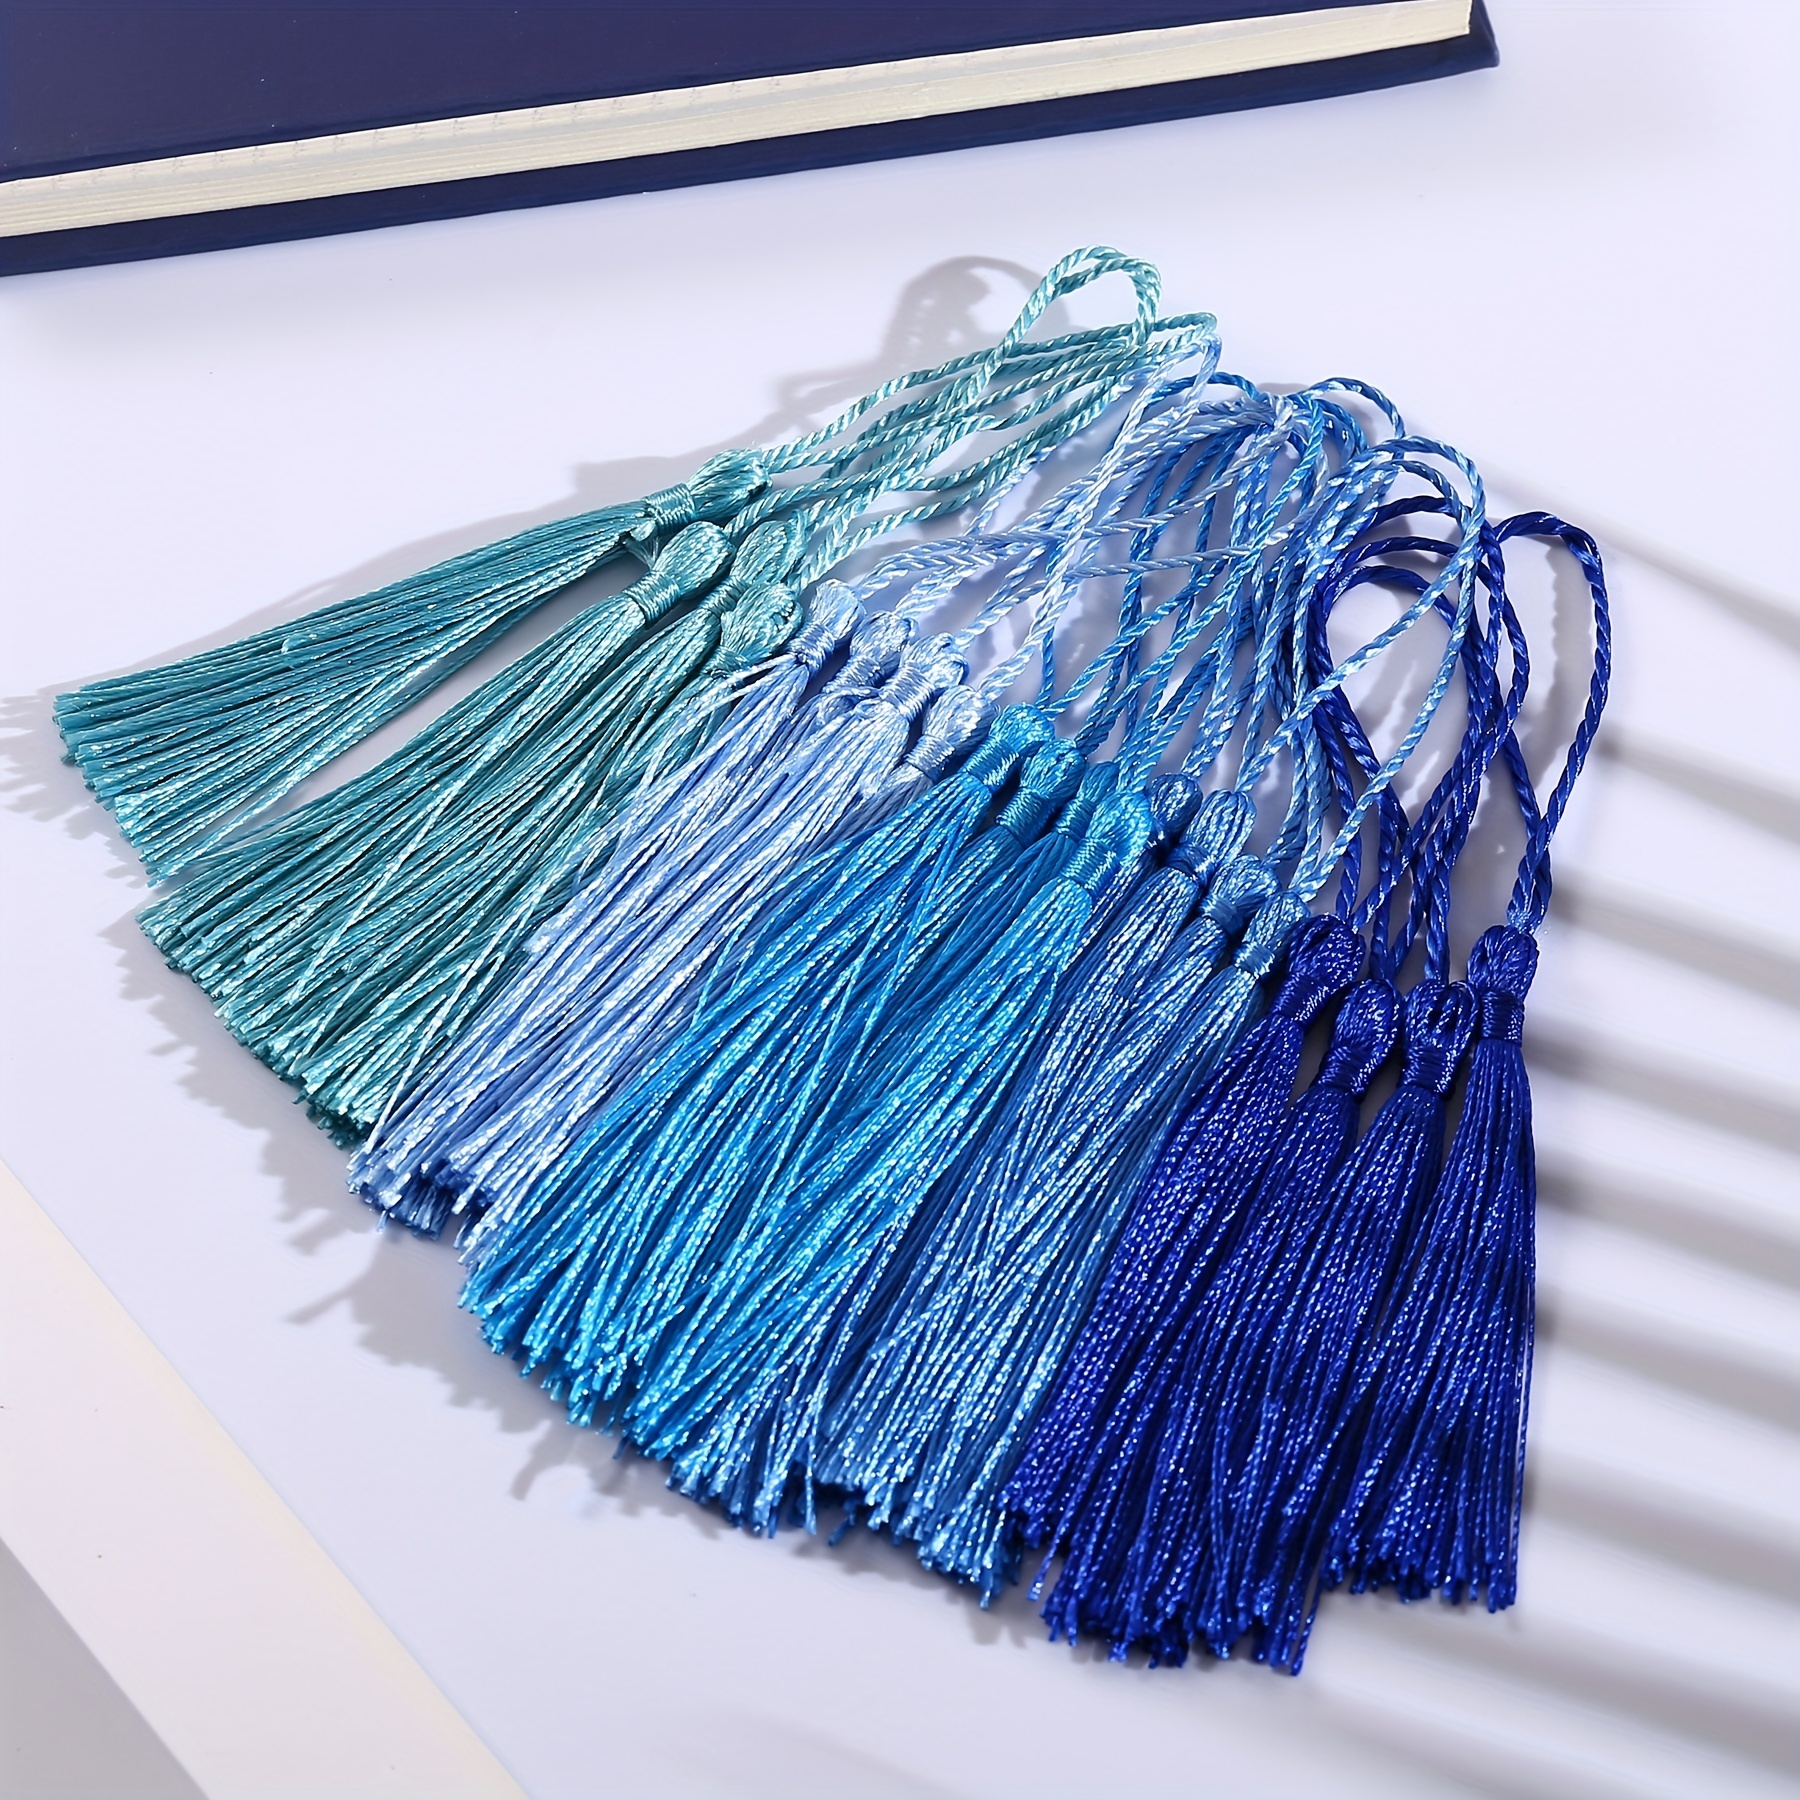  Kuasting 4pcs Handmade Soft Silky Tassels, 11.5 Inch Handmade  Tassels Bookmarks for DIY Crafts Jewelry Making,Graduation Clothing Sewing,  DIY Craft Accessory,Tags (Blue)